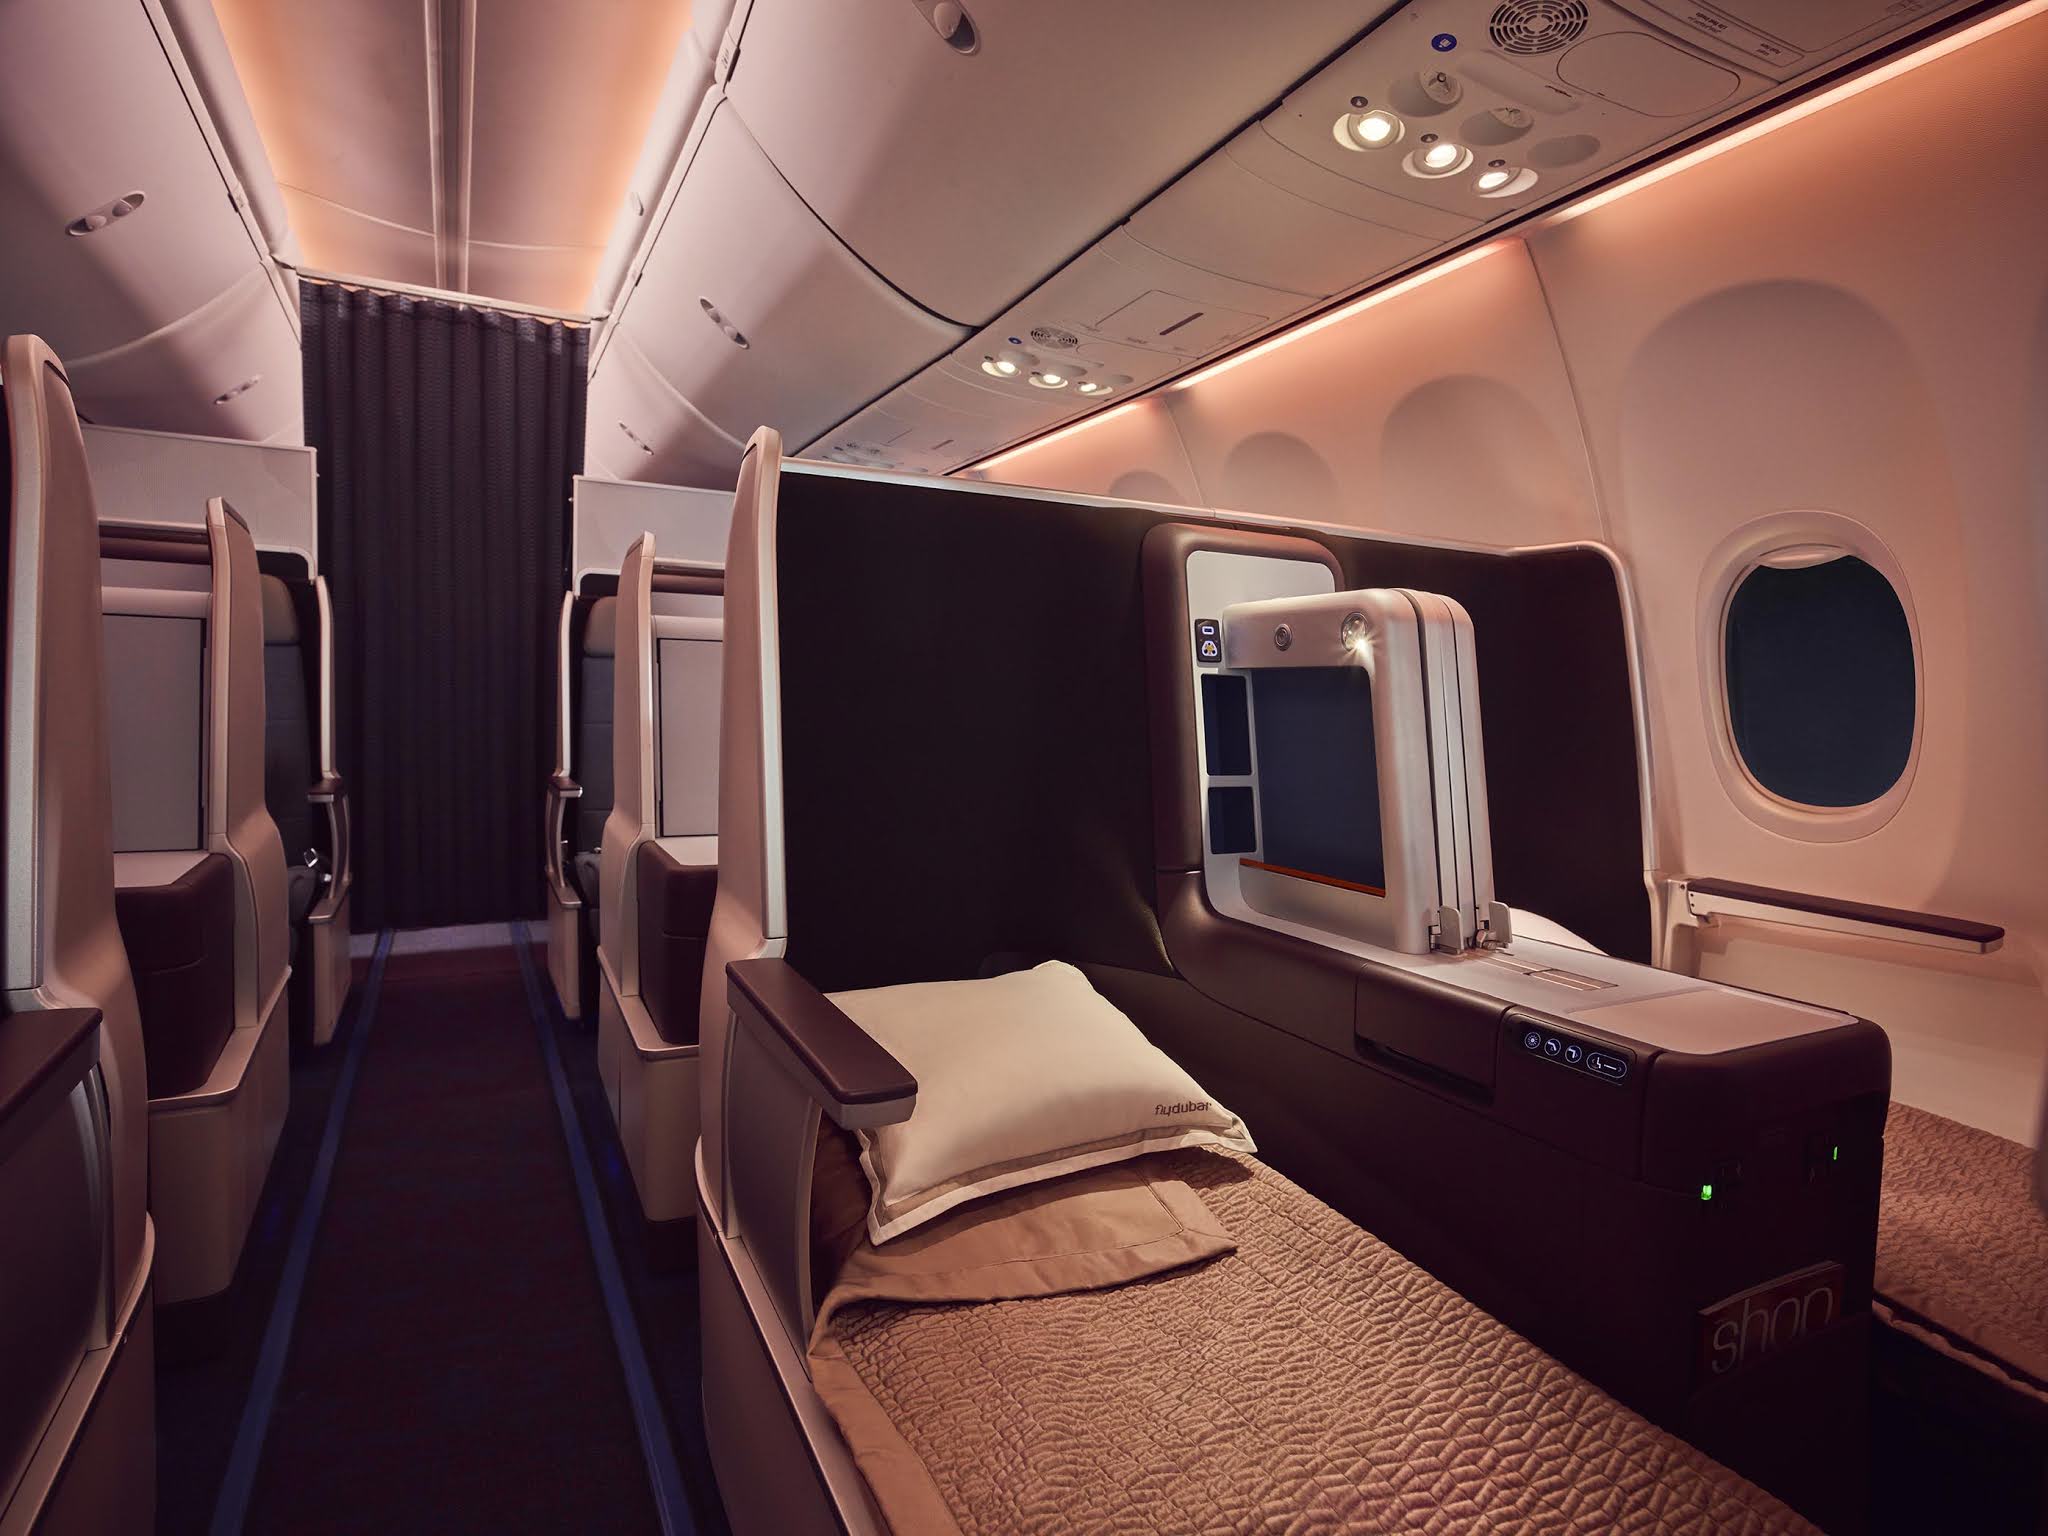 Flydubai restyles passenger experience to enable safe travel